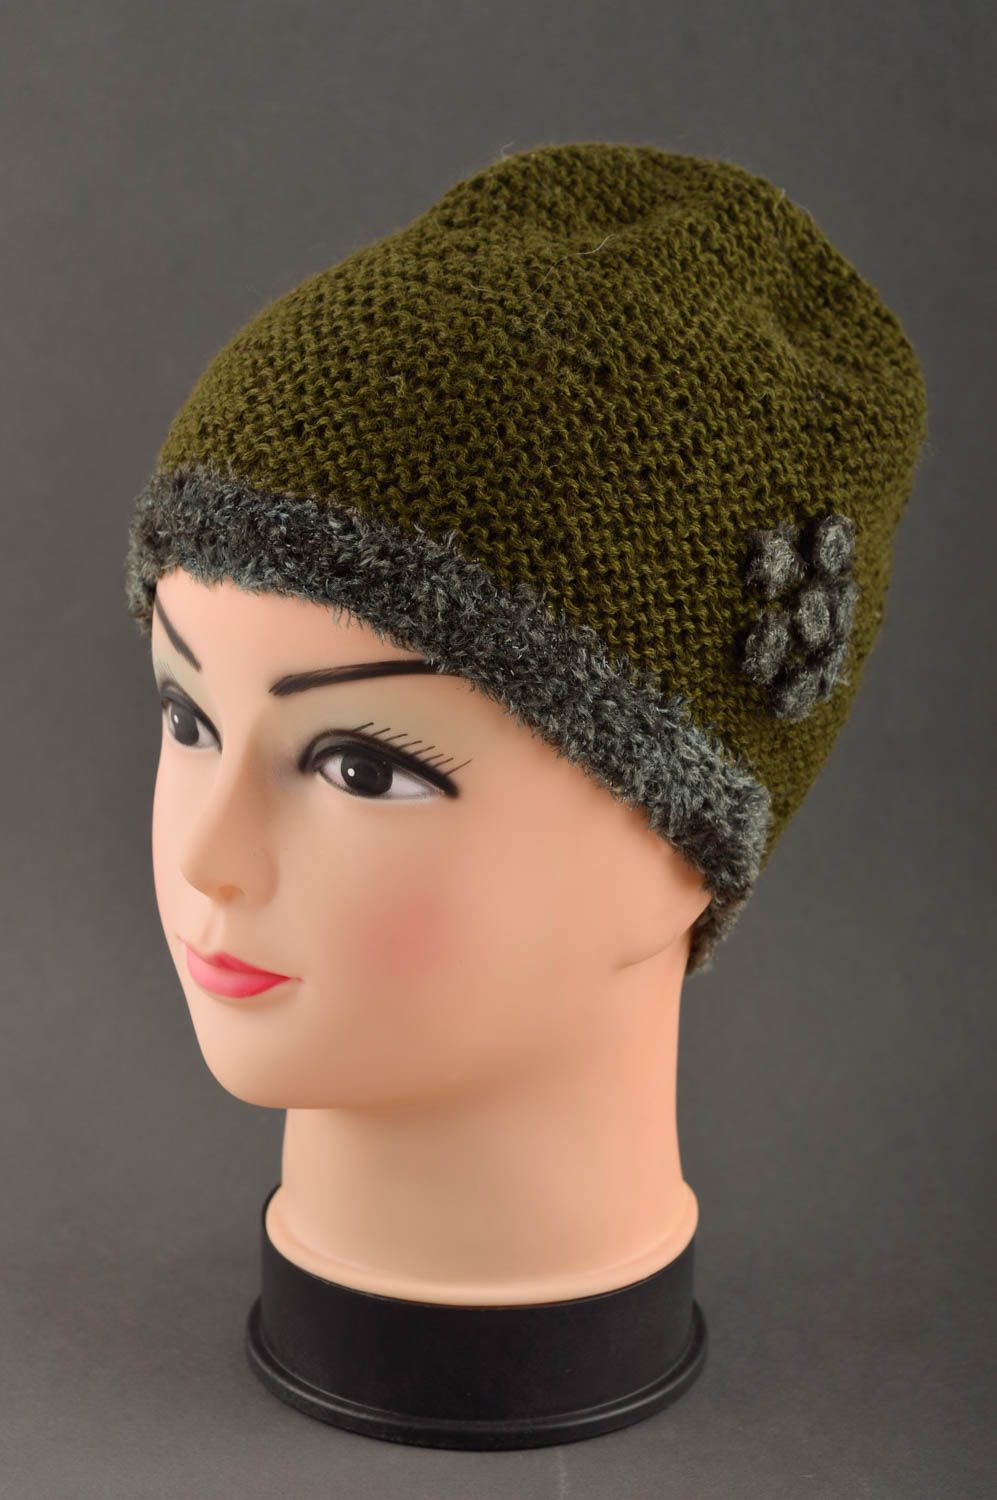 Handmade hat designer hat warm winter hat unusual hat for girl crocheted hat photo 1